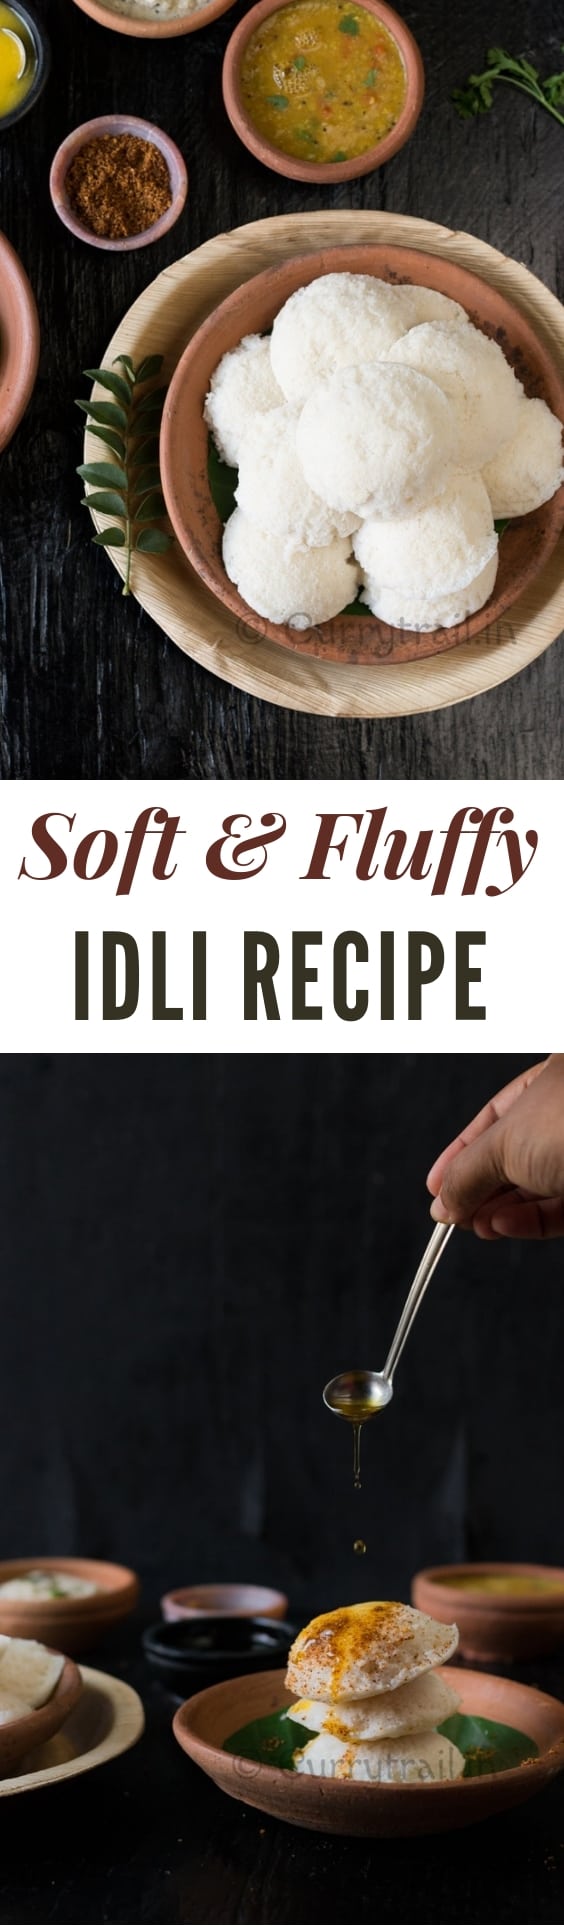 idli recipe with text overlay